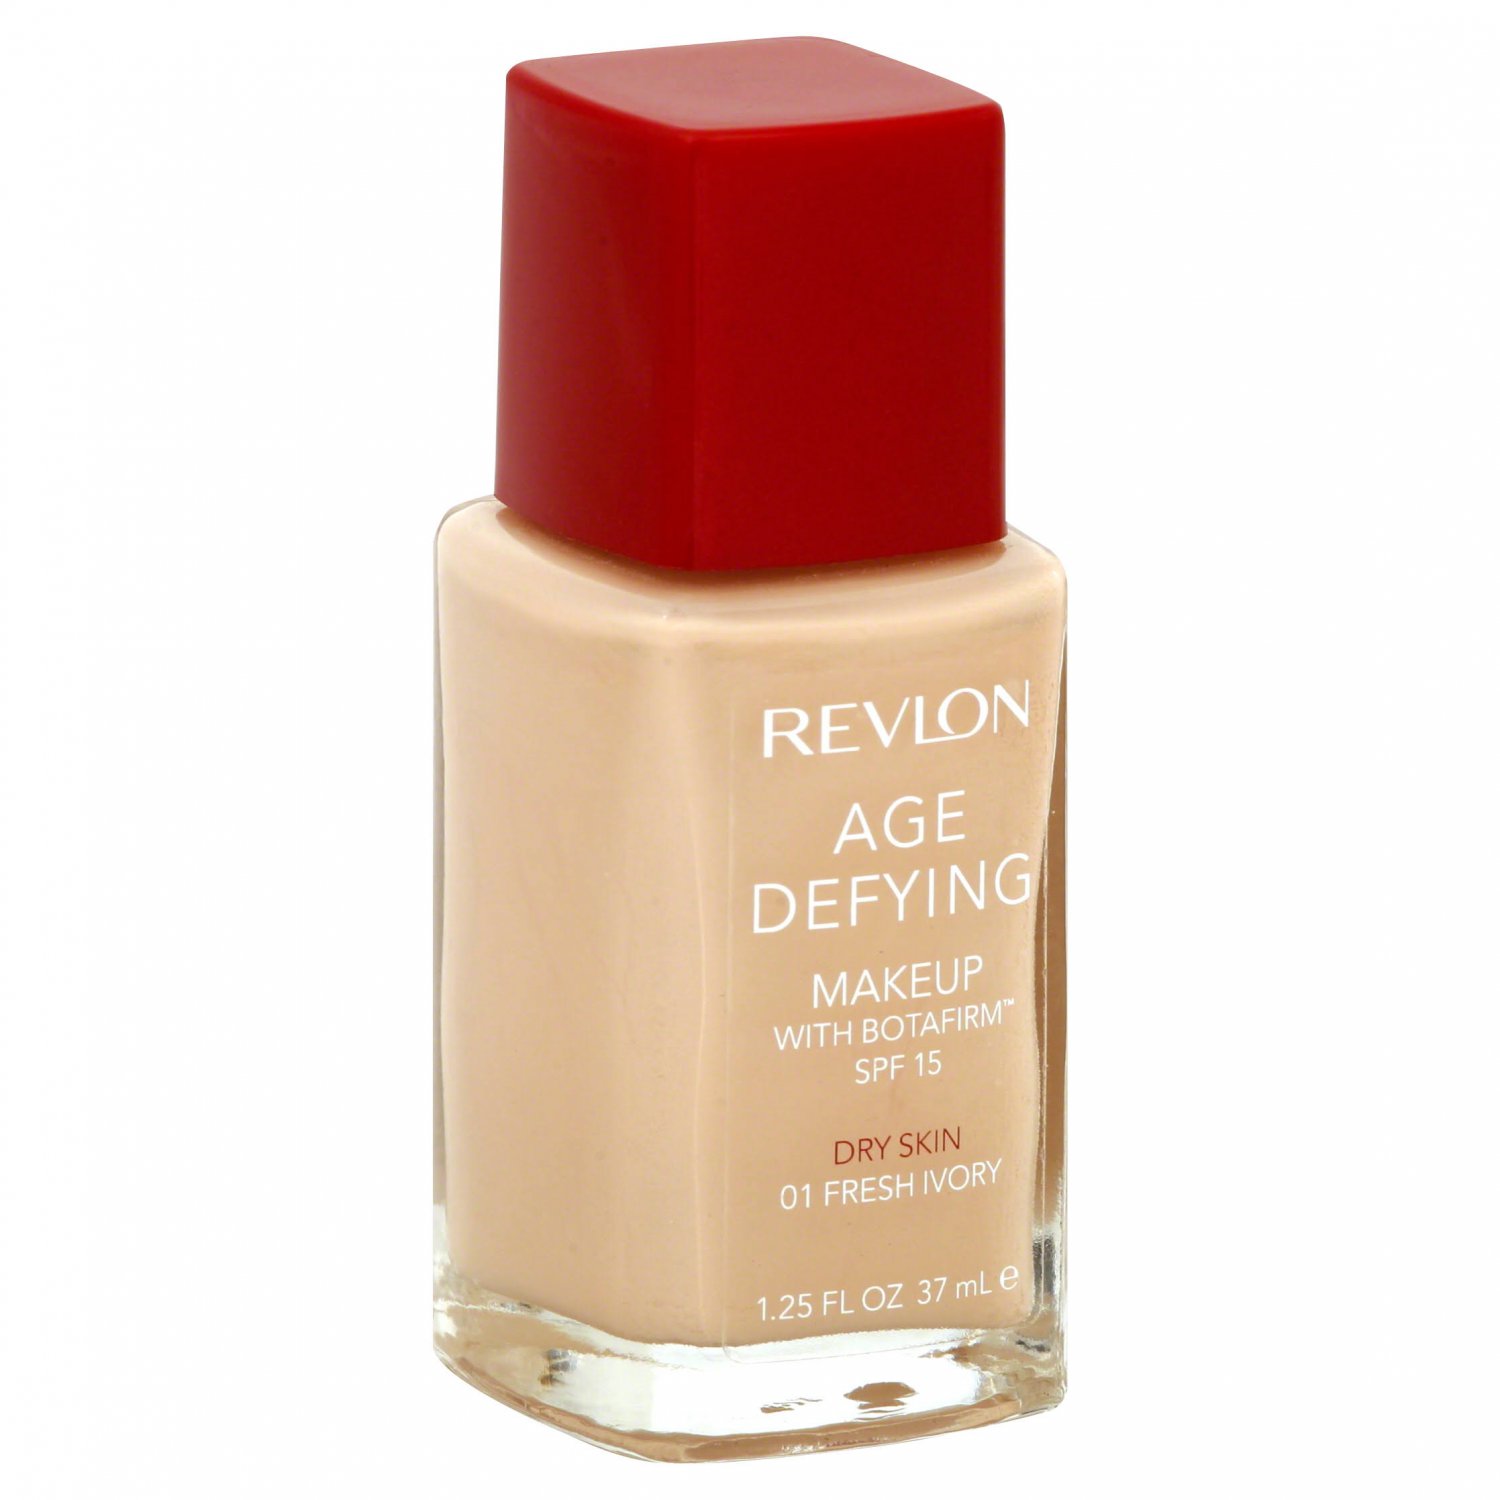 REVLON Age Defying Makeup for Dry Skin - Fresh Ivory 01